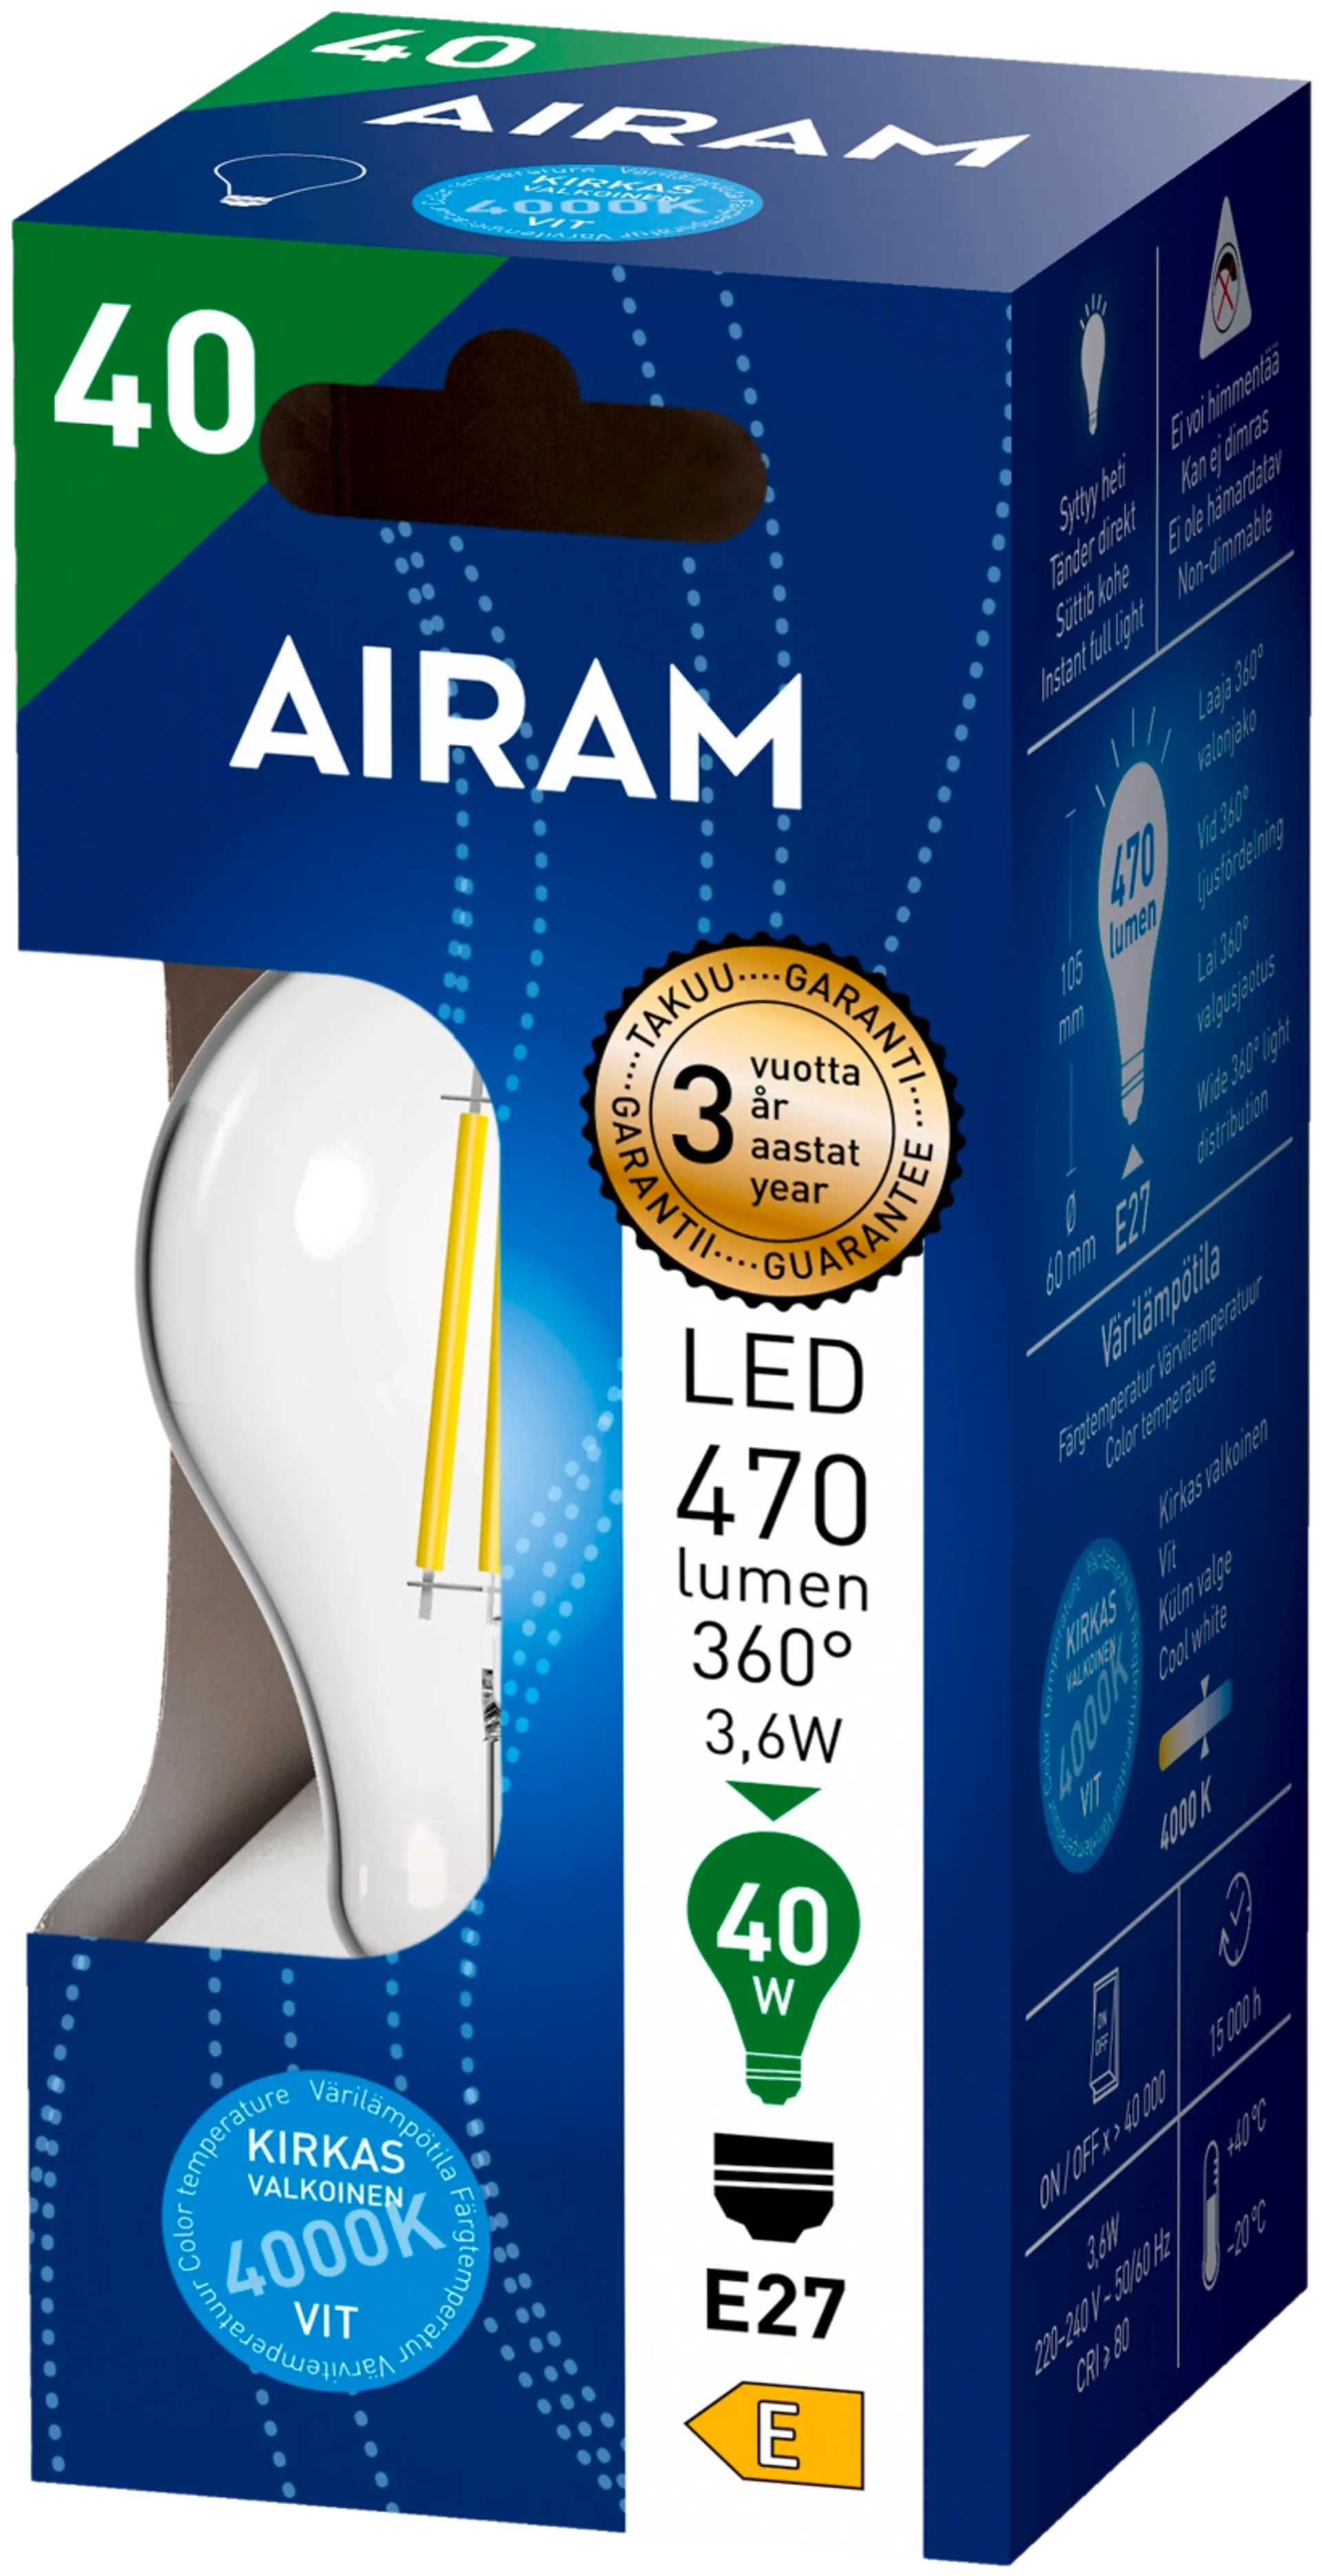 Airam LED Vakio 3,6W 470lm 4000K E27 kirkas - 2